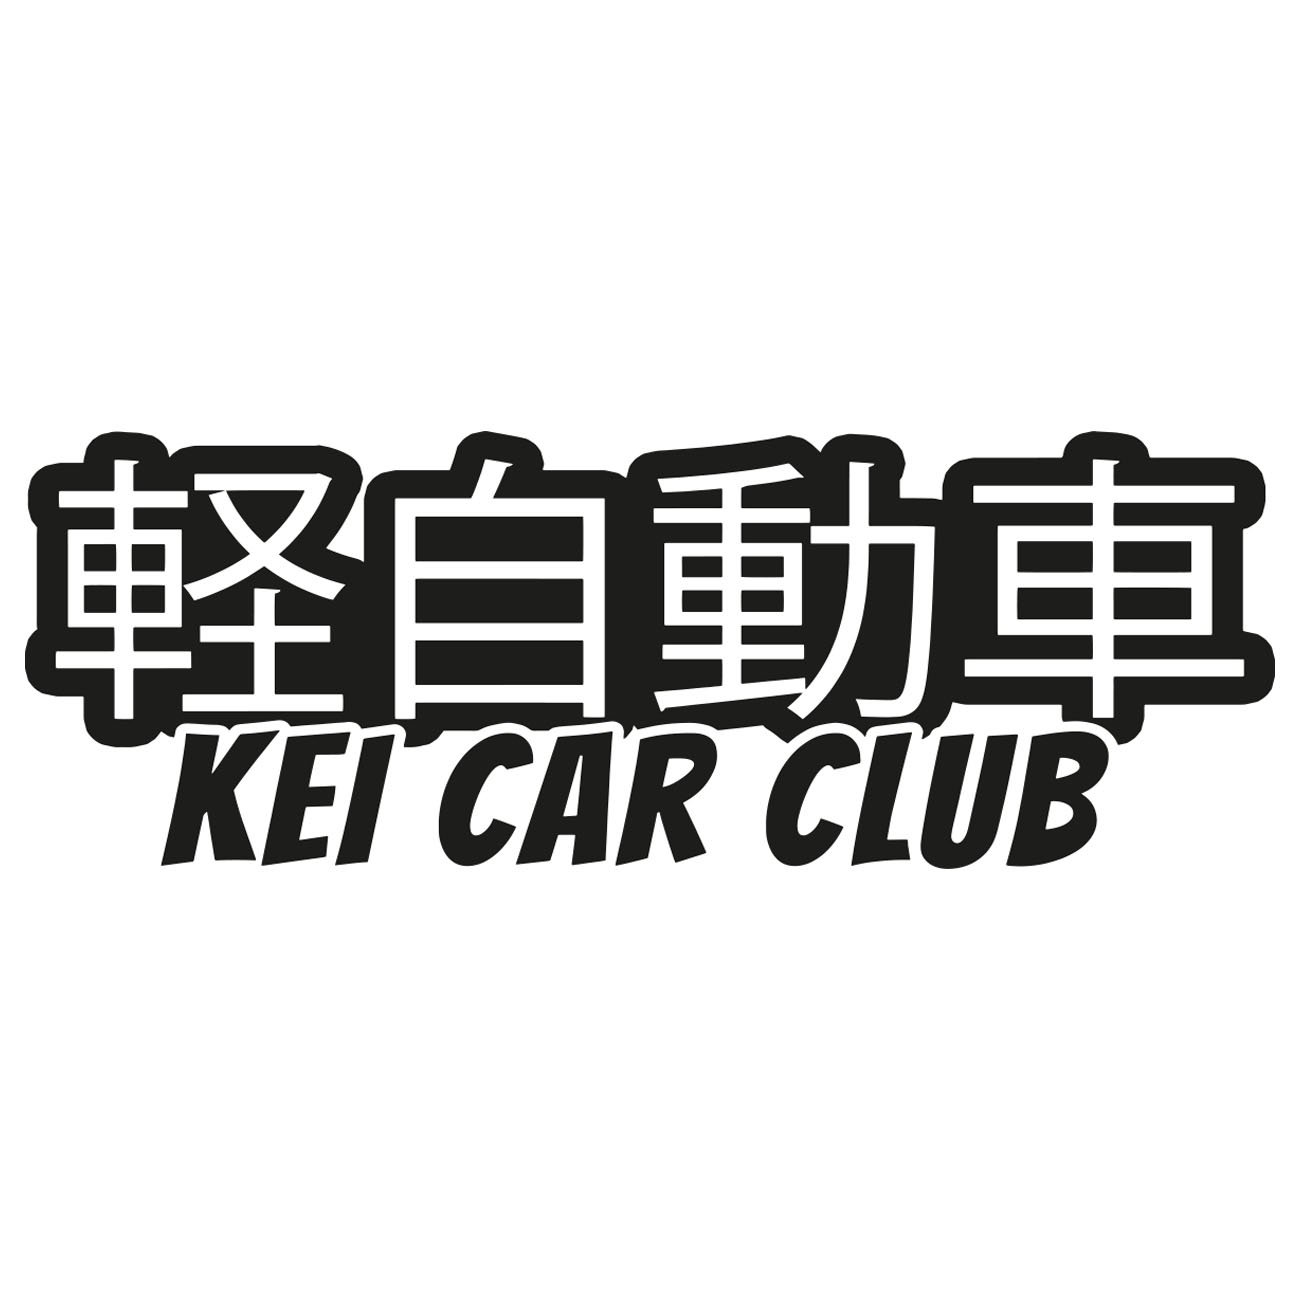 Kei car club